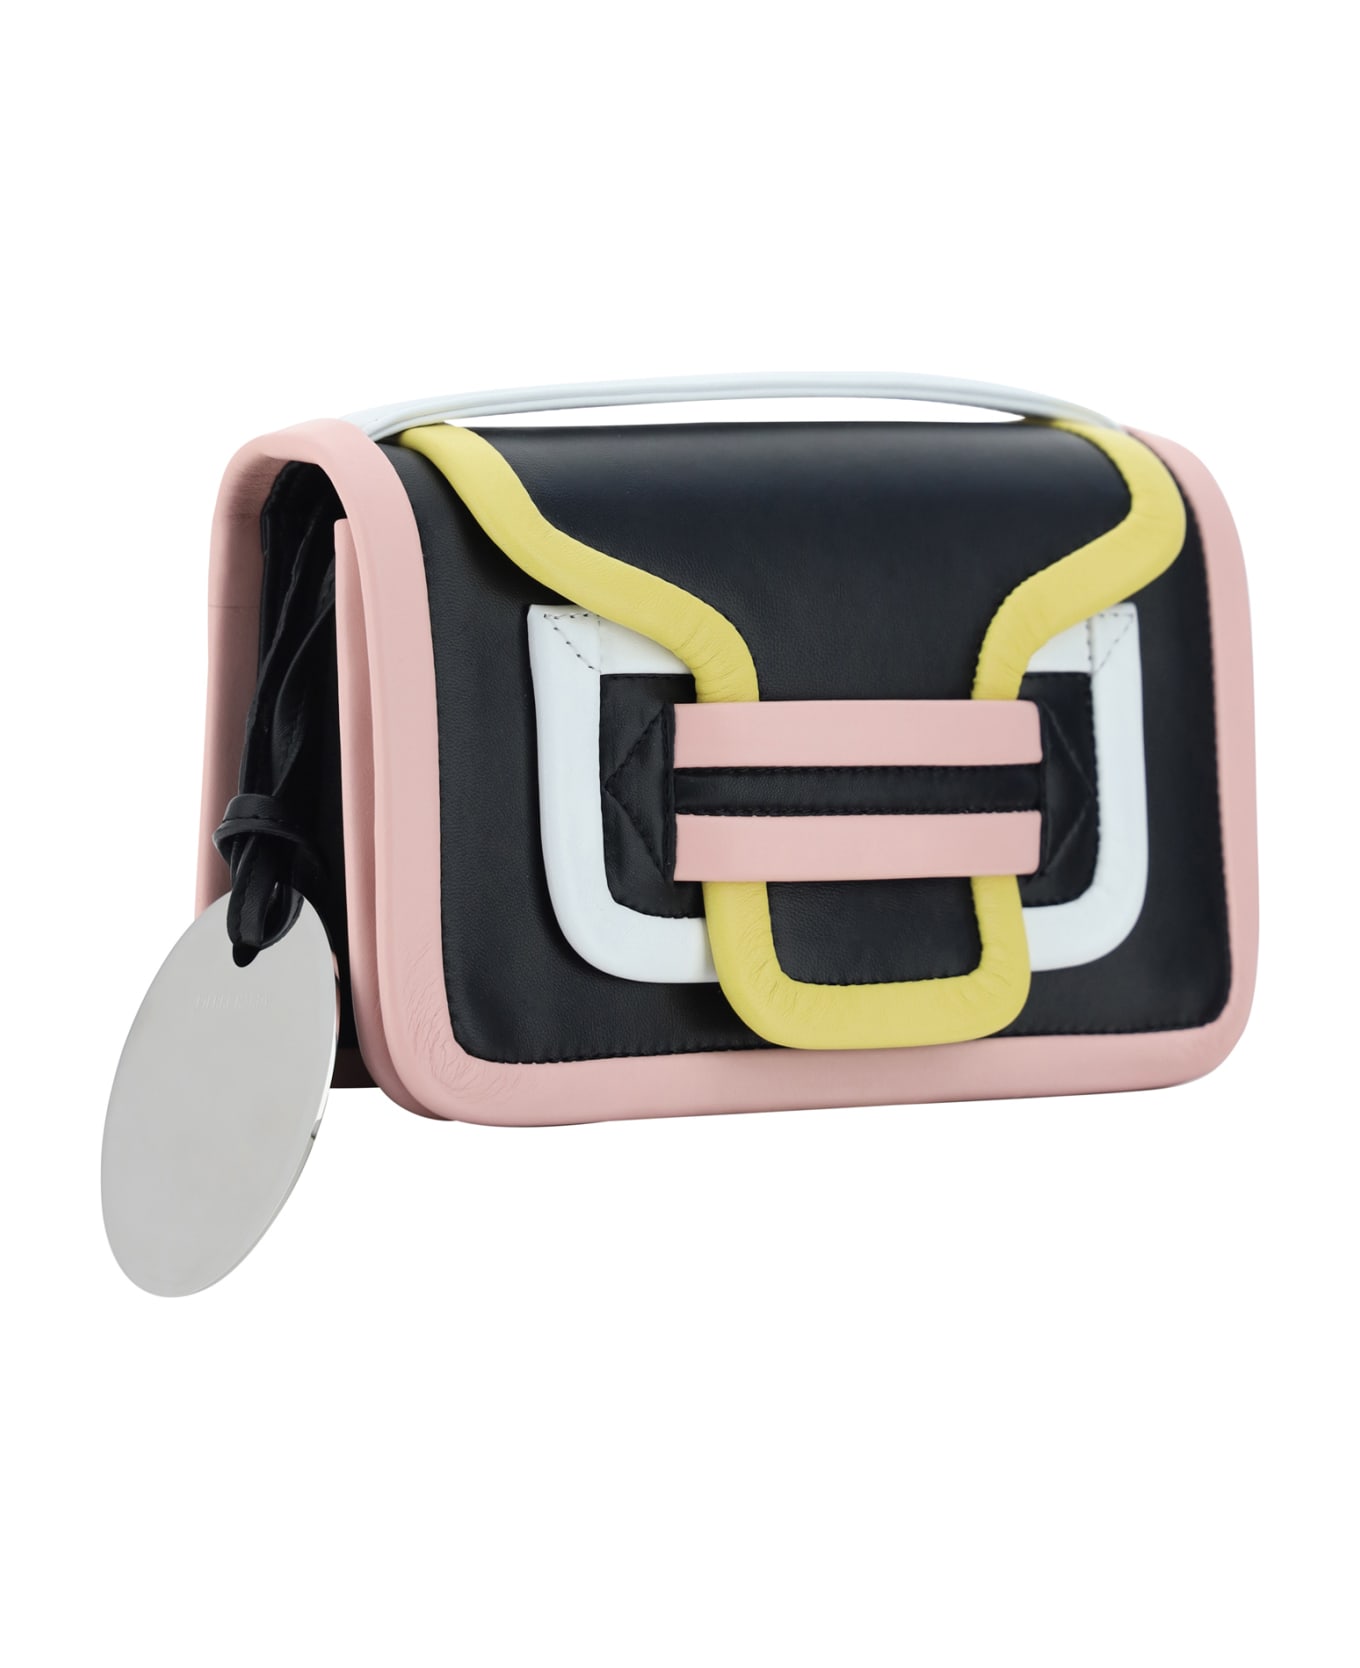 Pierre Hardy Alpha Handbag - Black/pink/yellow ショルダーバッグ